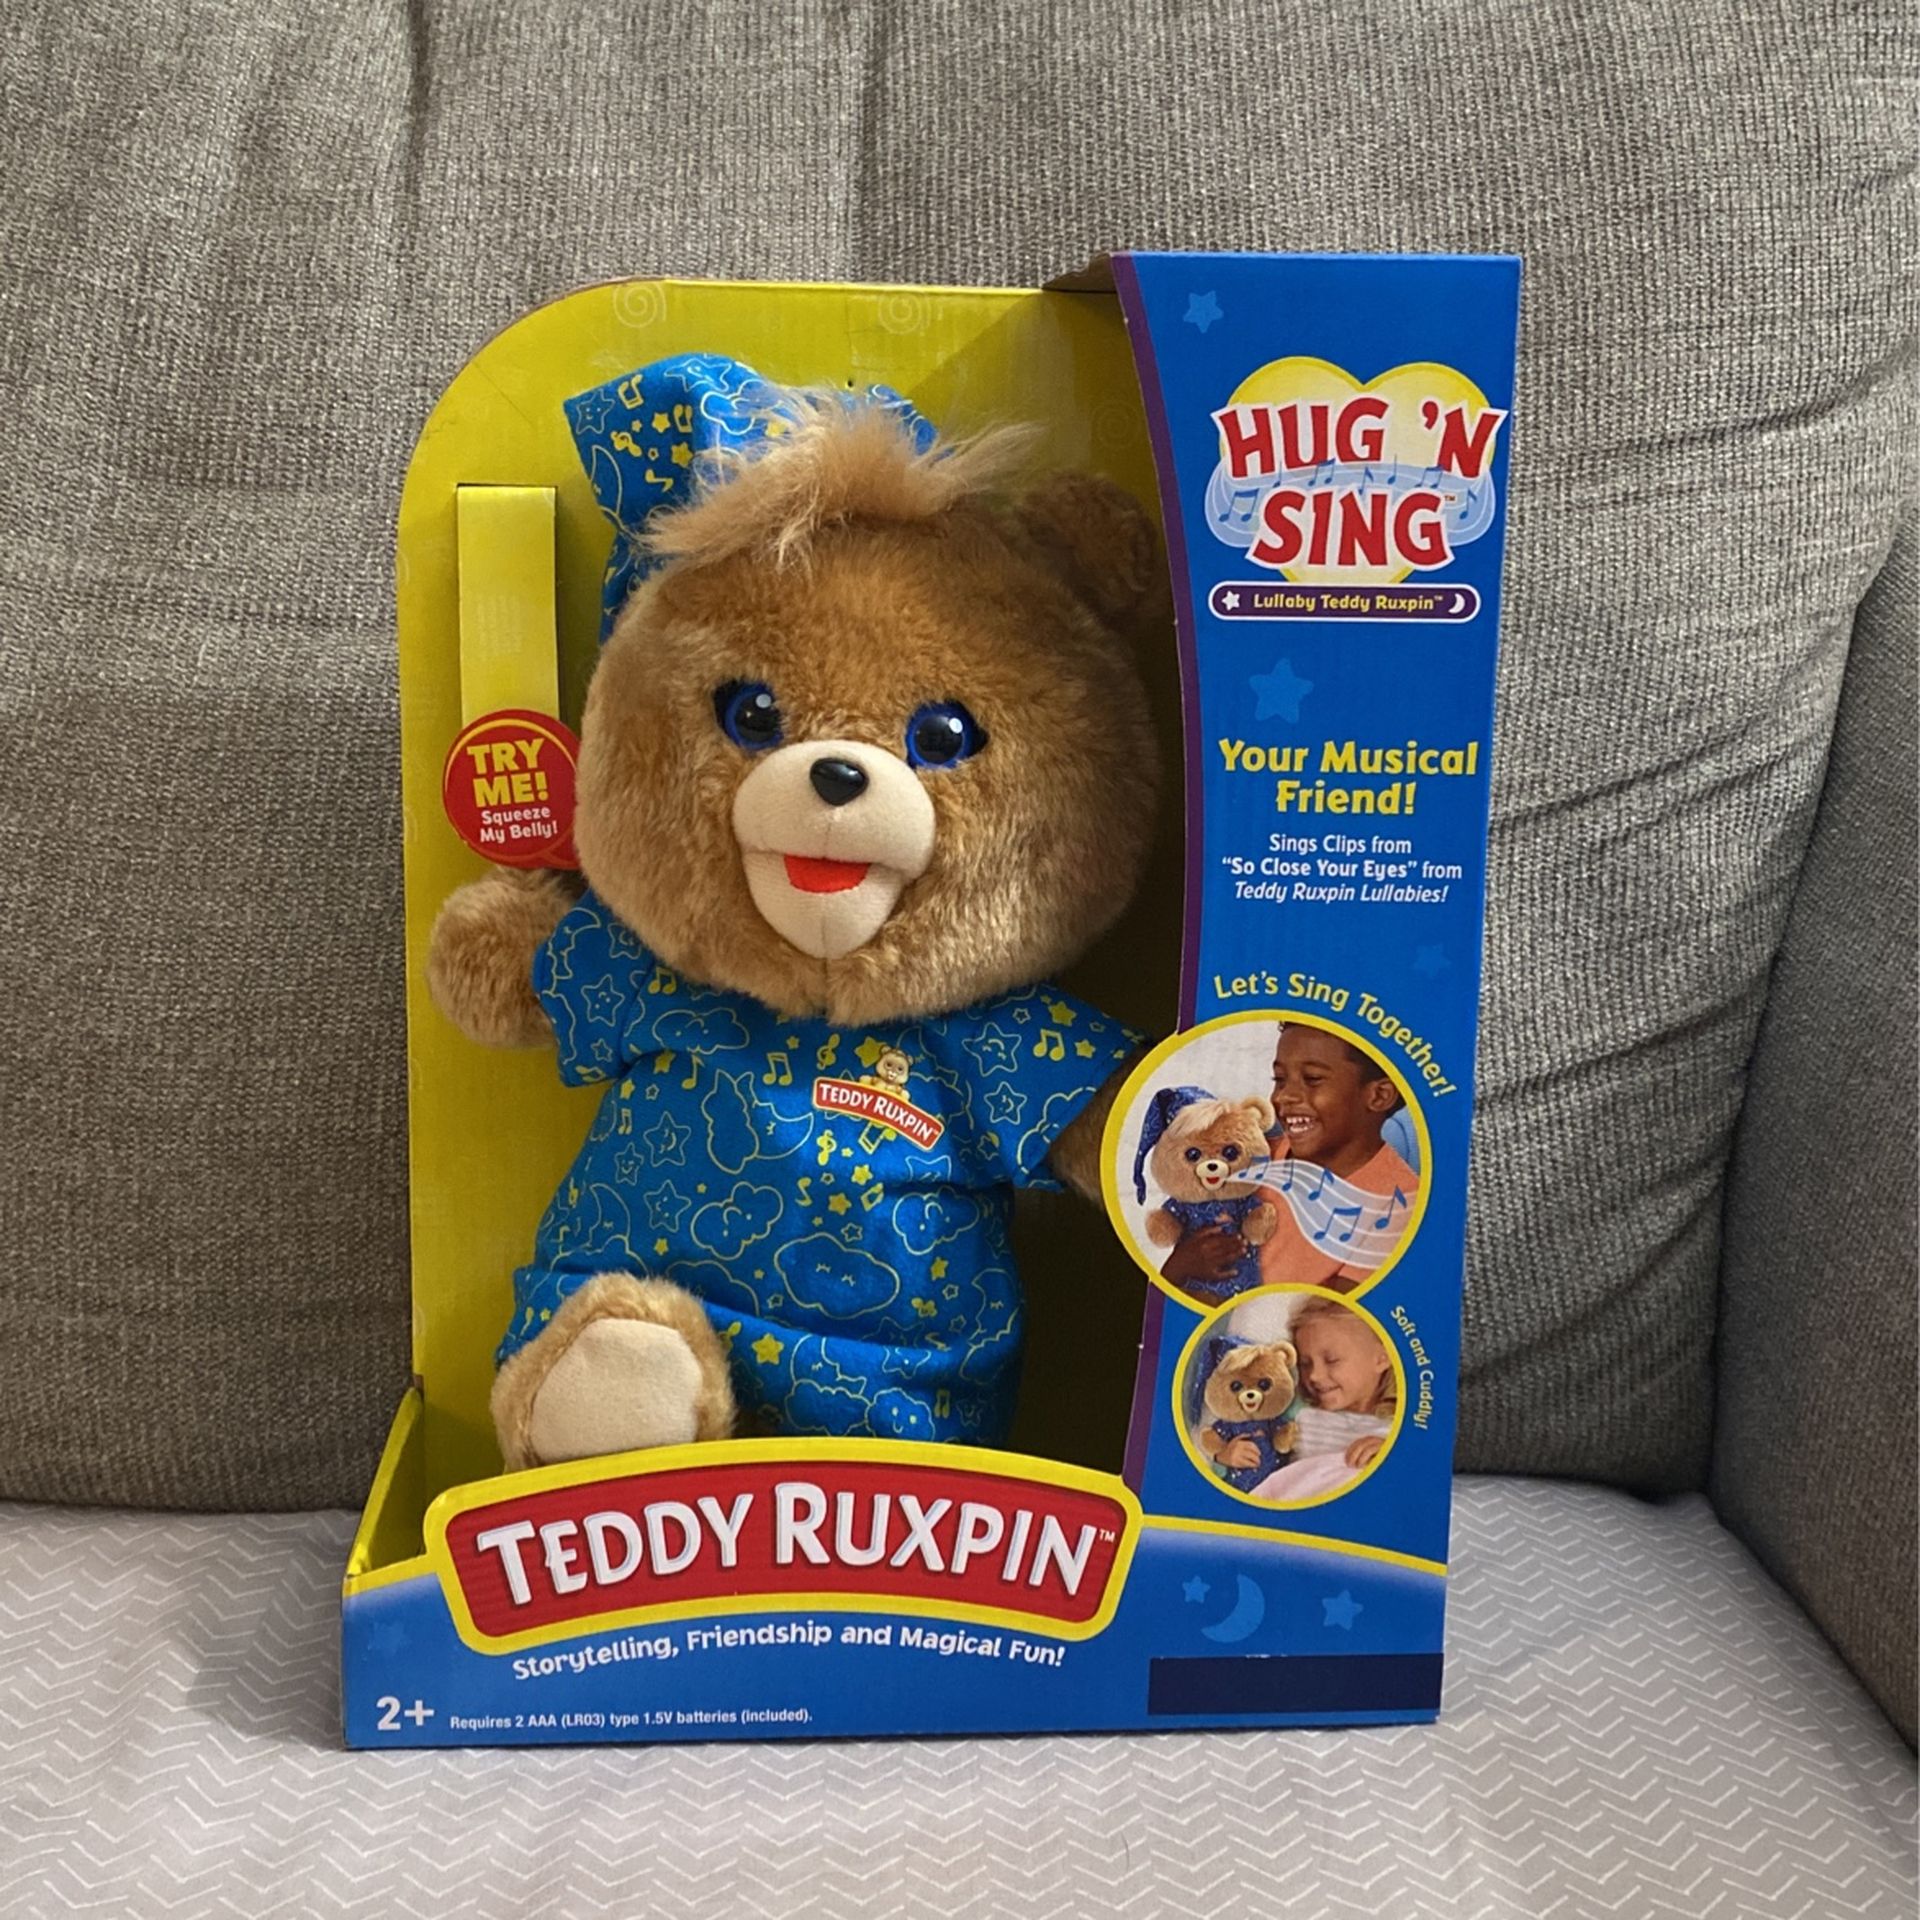 Teddy Ruxpin Hug ‘N Sing